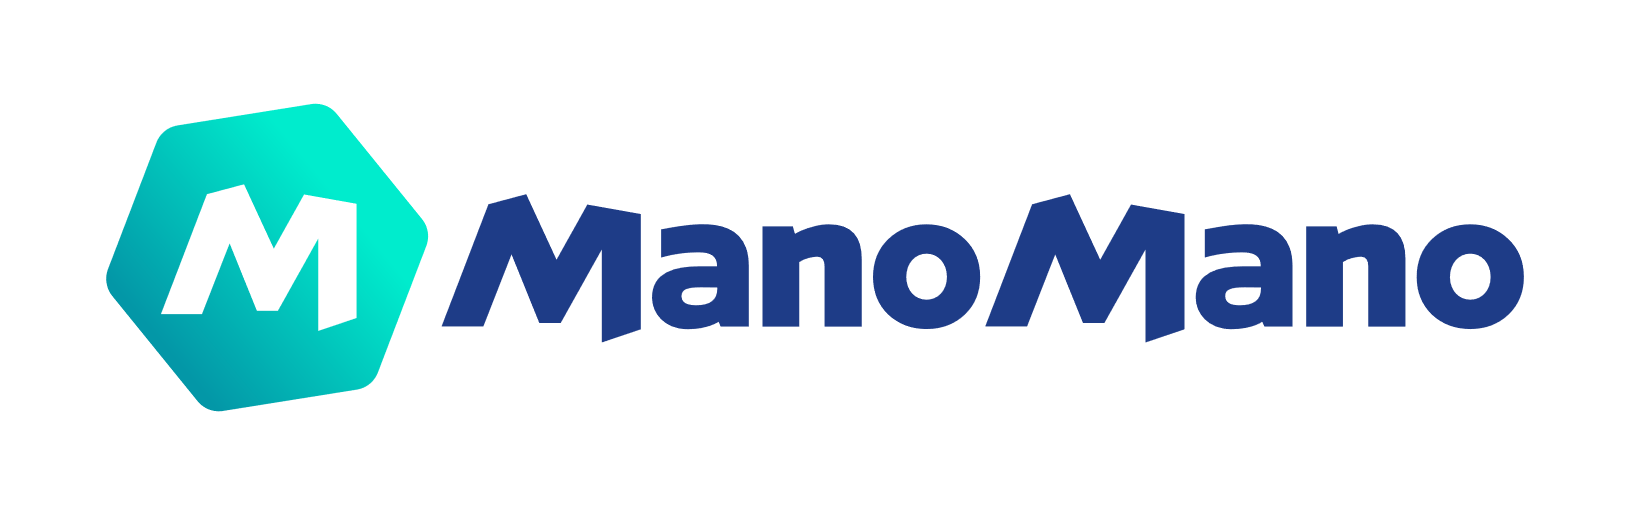 Het ManoMano logo.